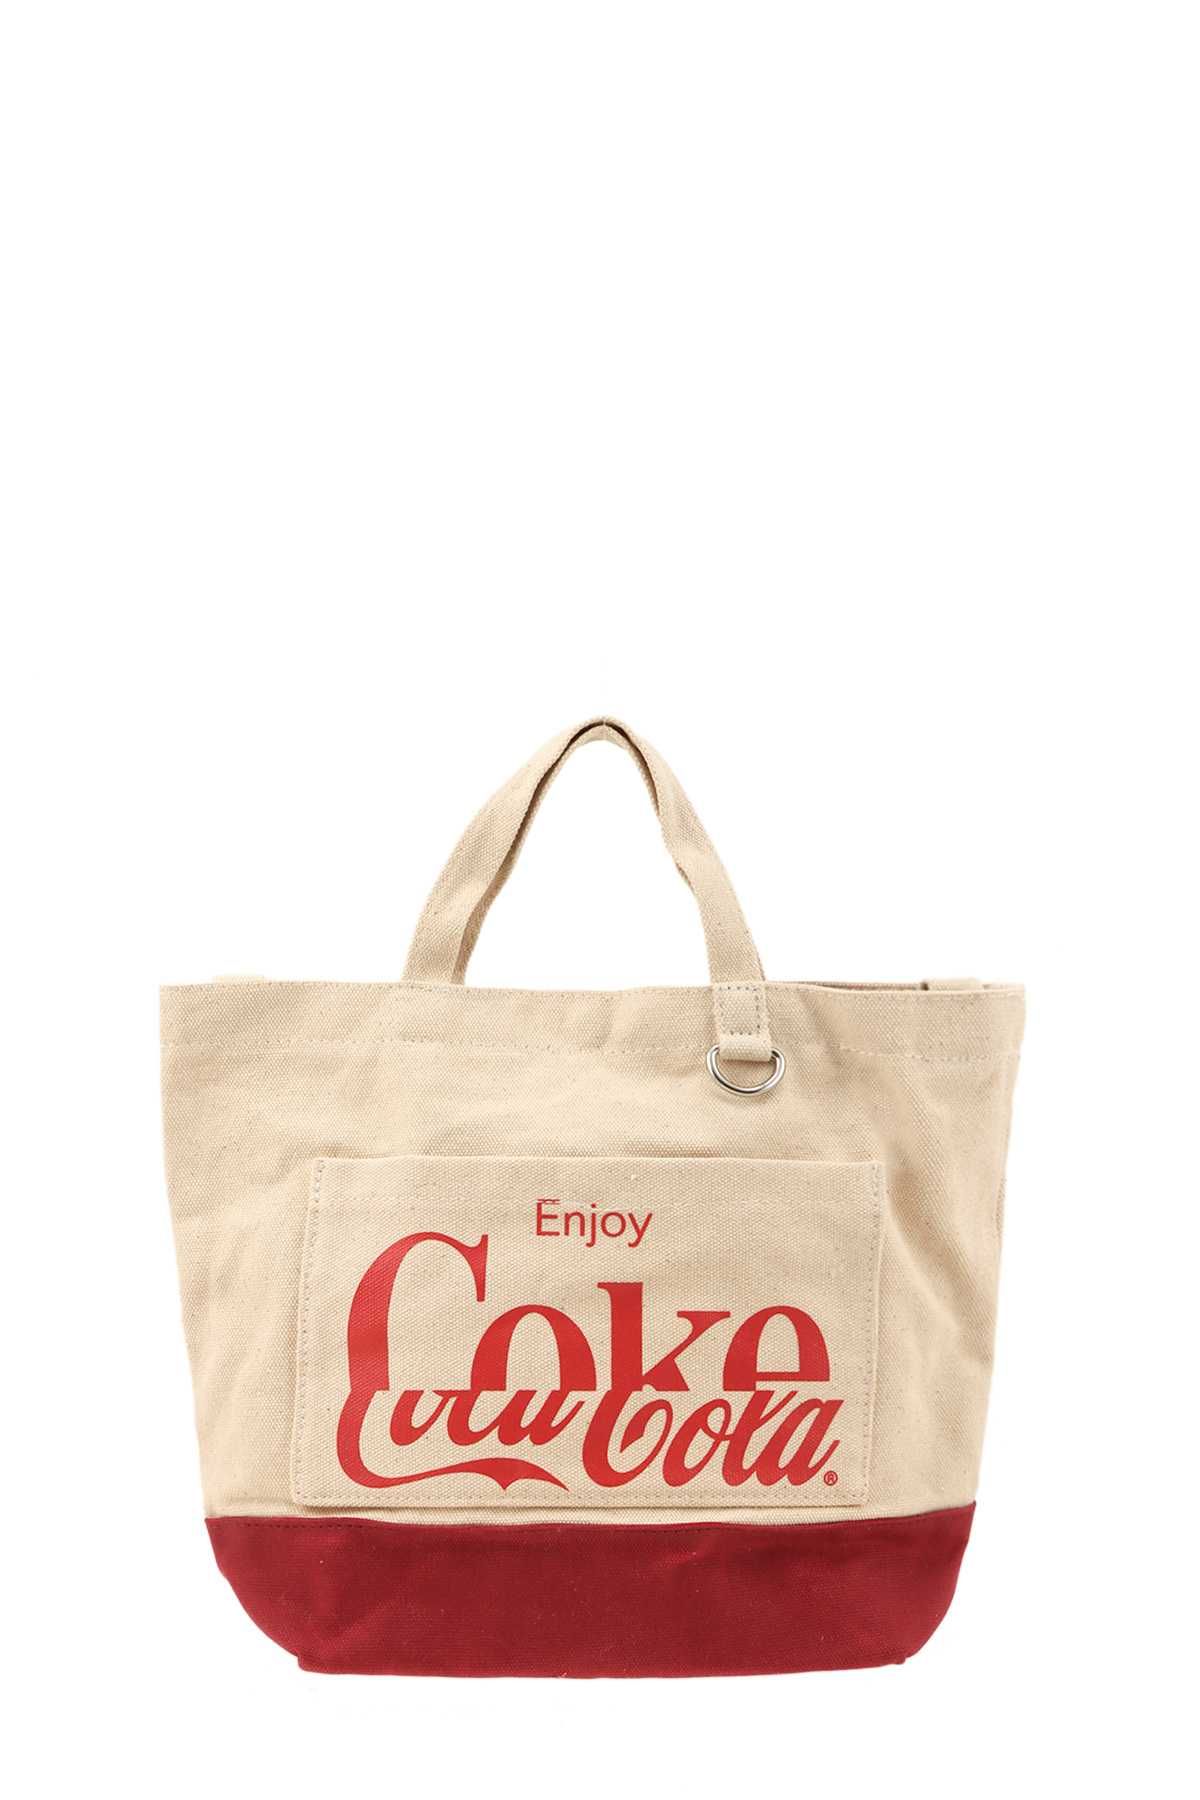 Coca Cola Small Hand Held Bag